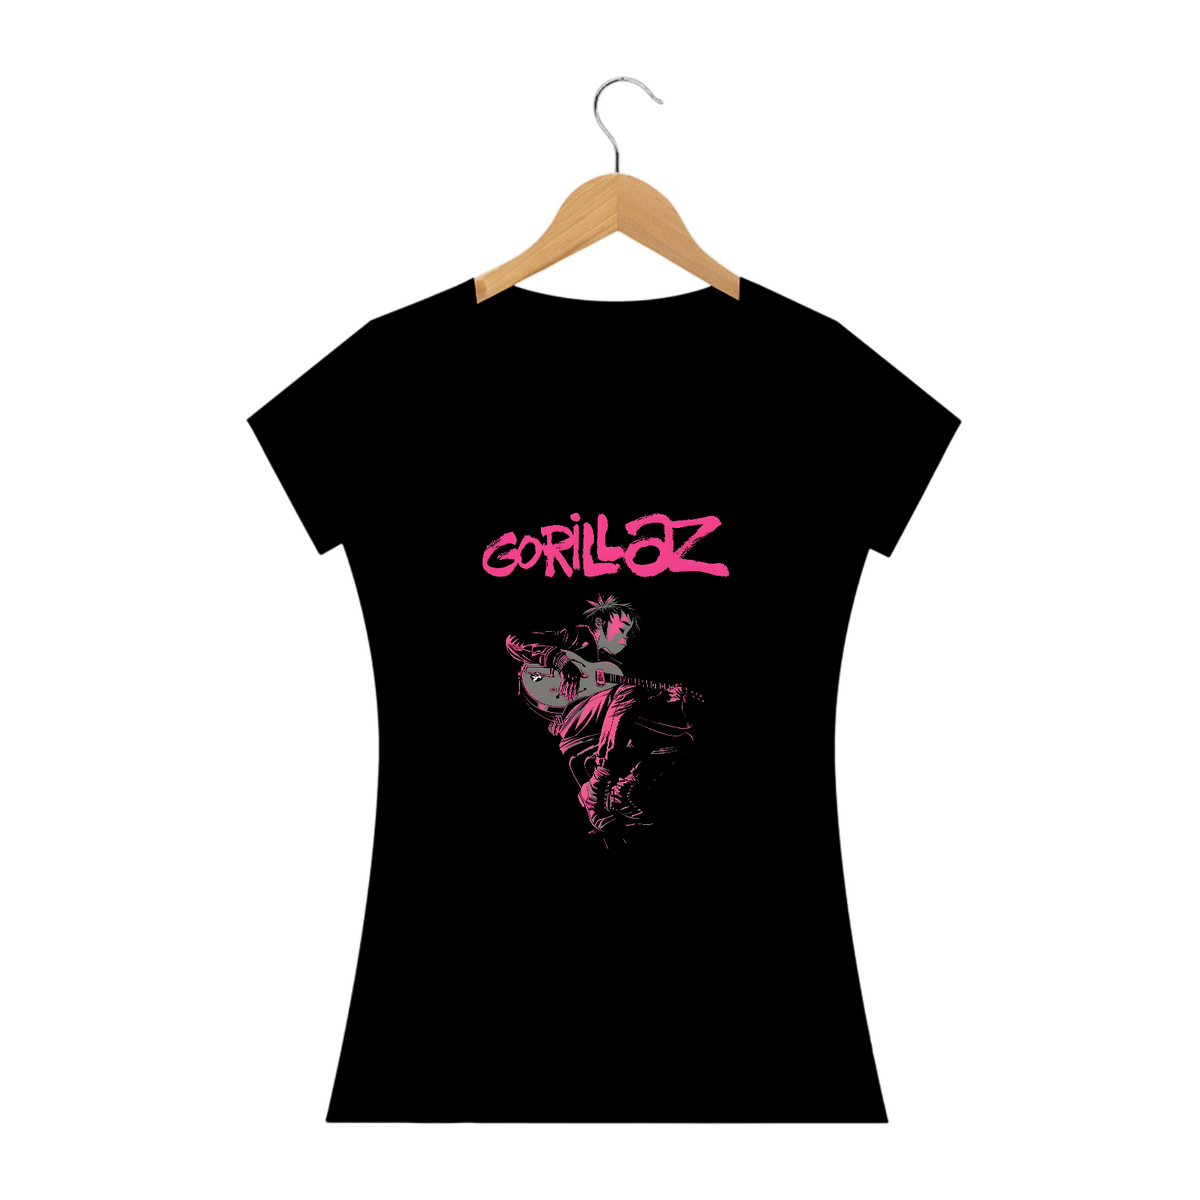 Nome do produto: Camiseta Gorillaz The Now Now